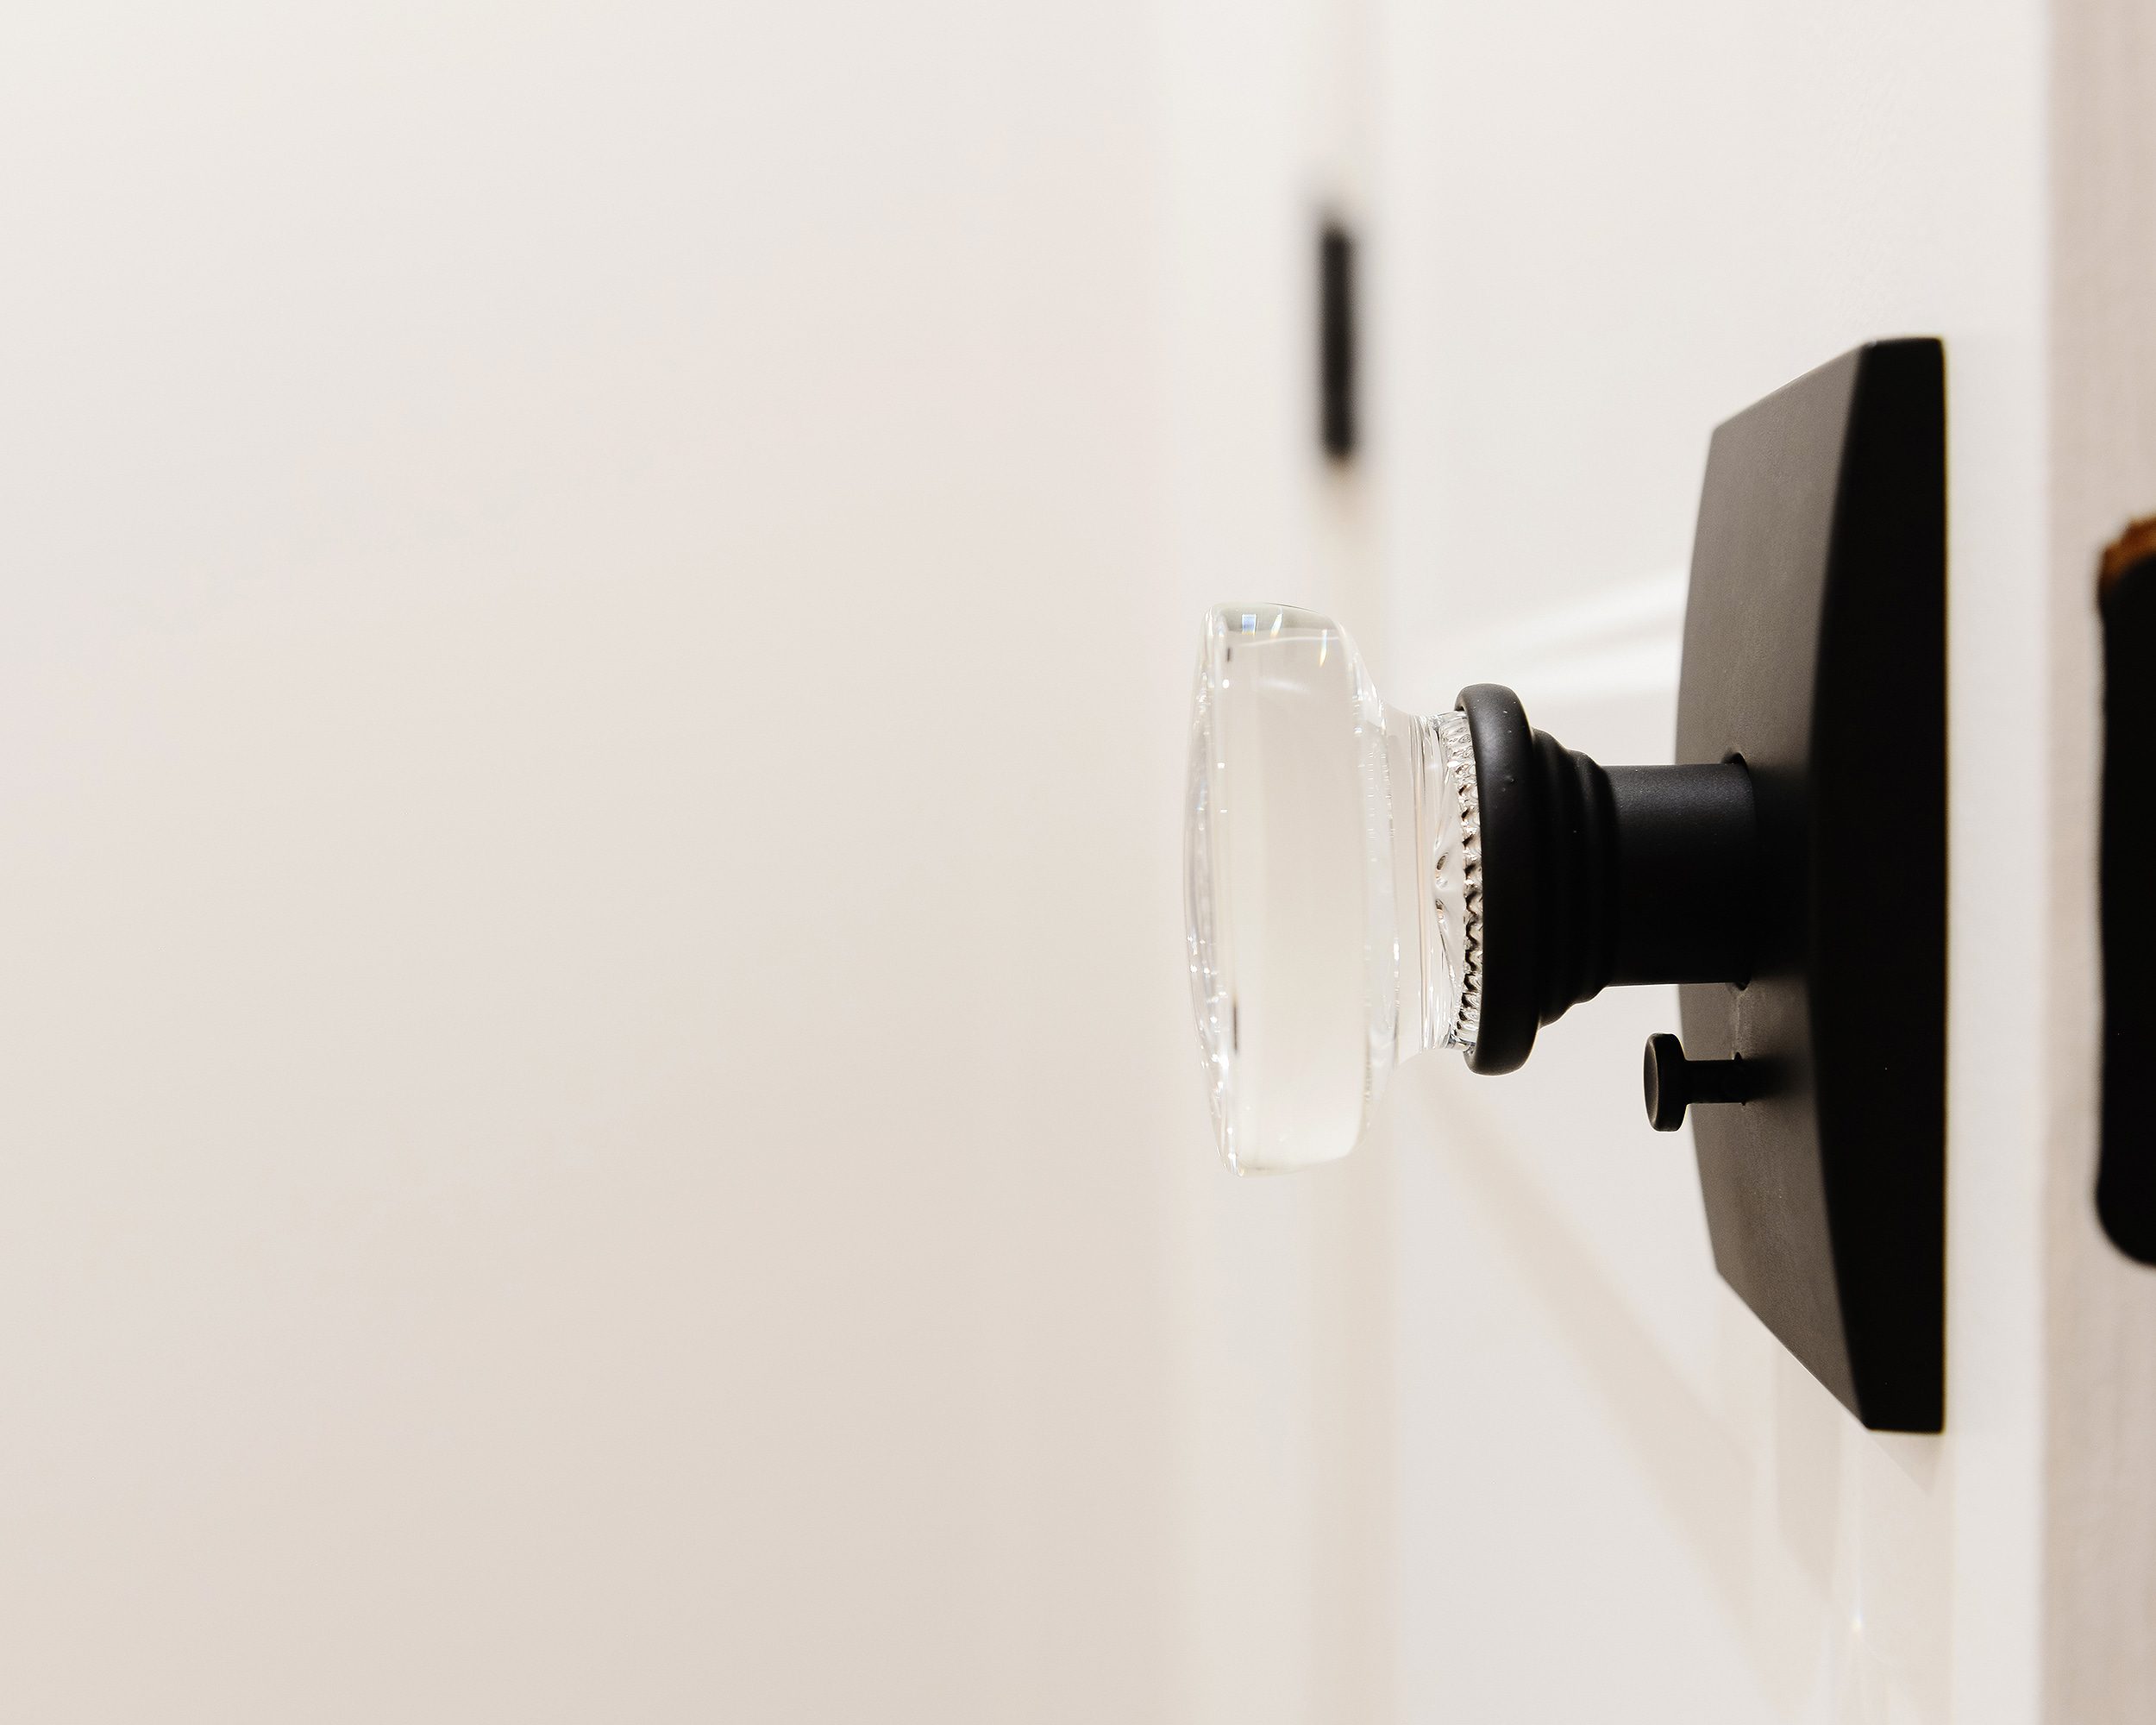 Schlage custom hobson glass knob detail, locking mechanism close-up | via Yellow Brick Home